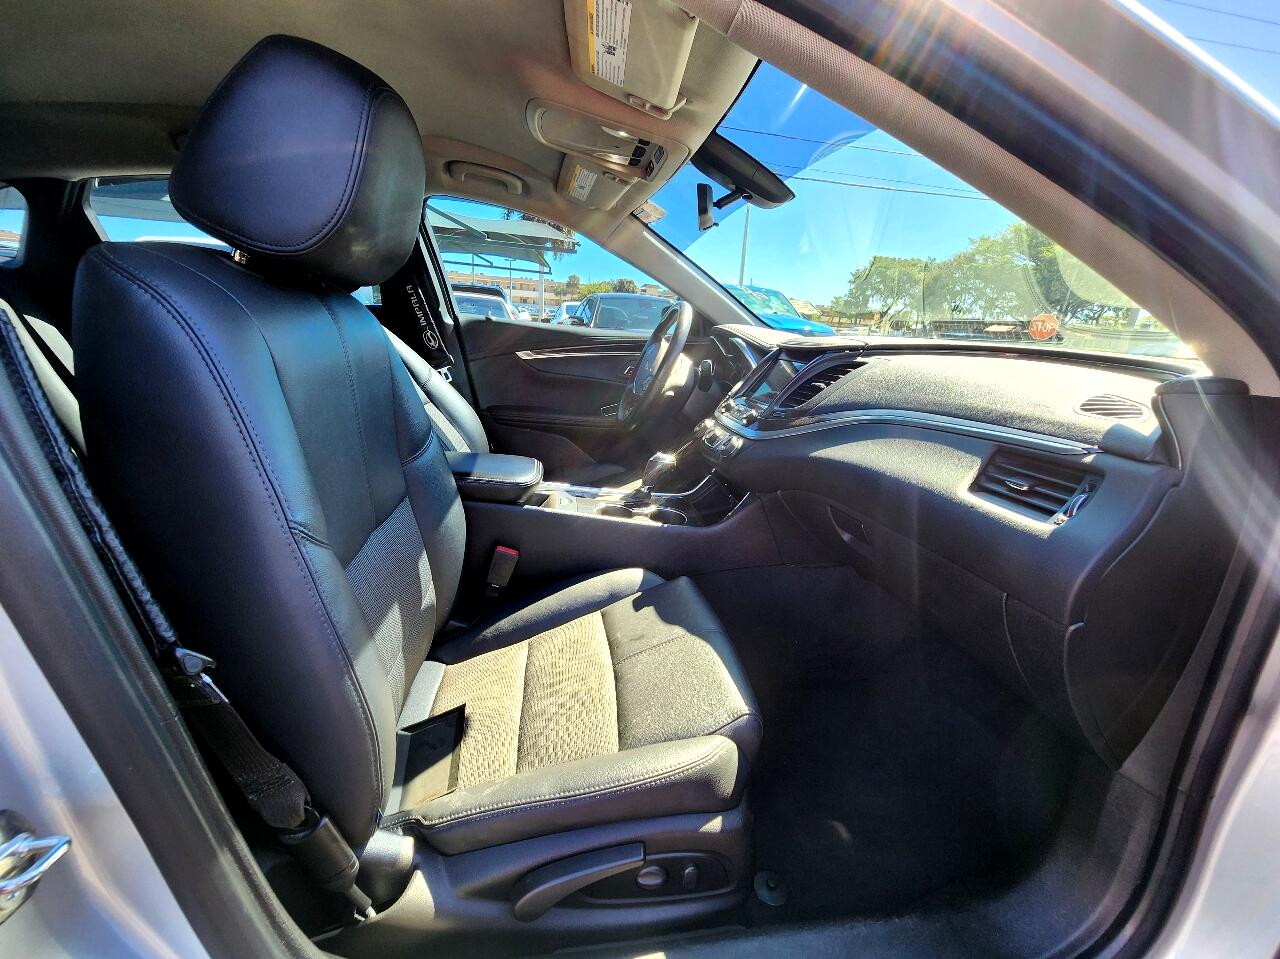 2020 CHEVROLET Impala Sedan - $17,999